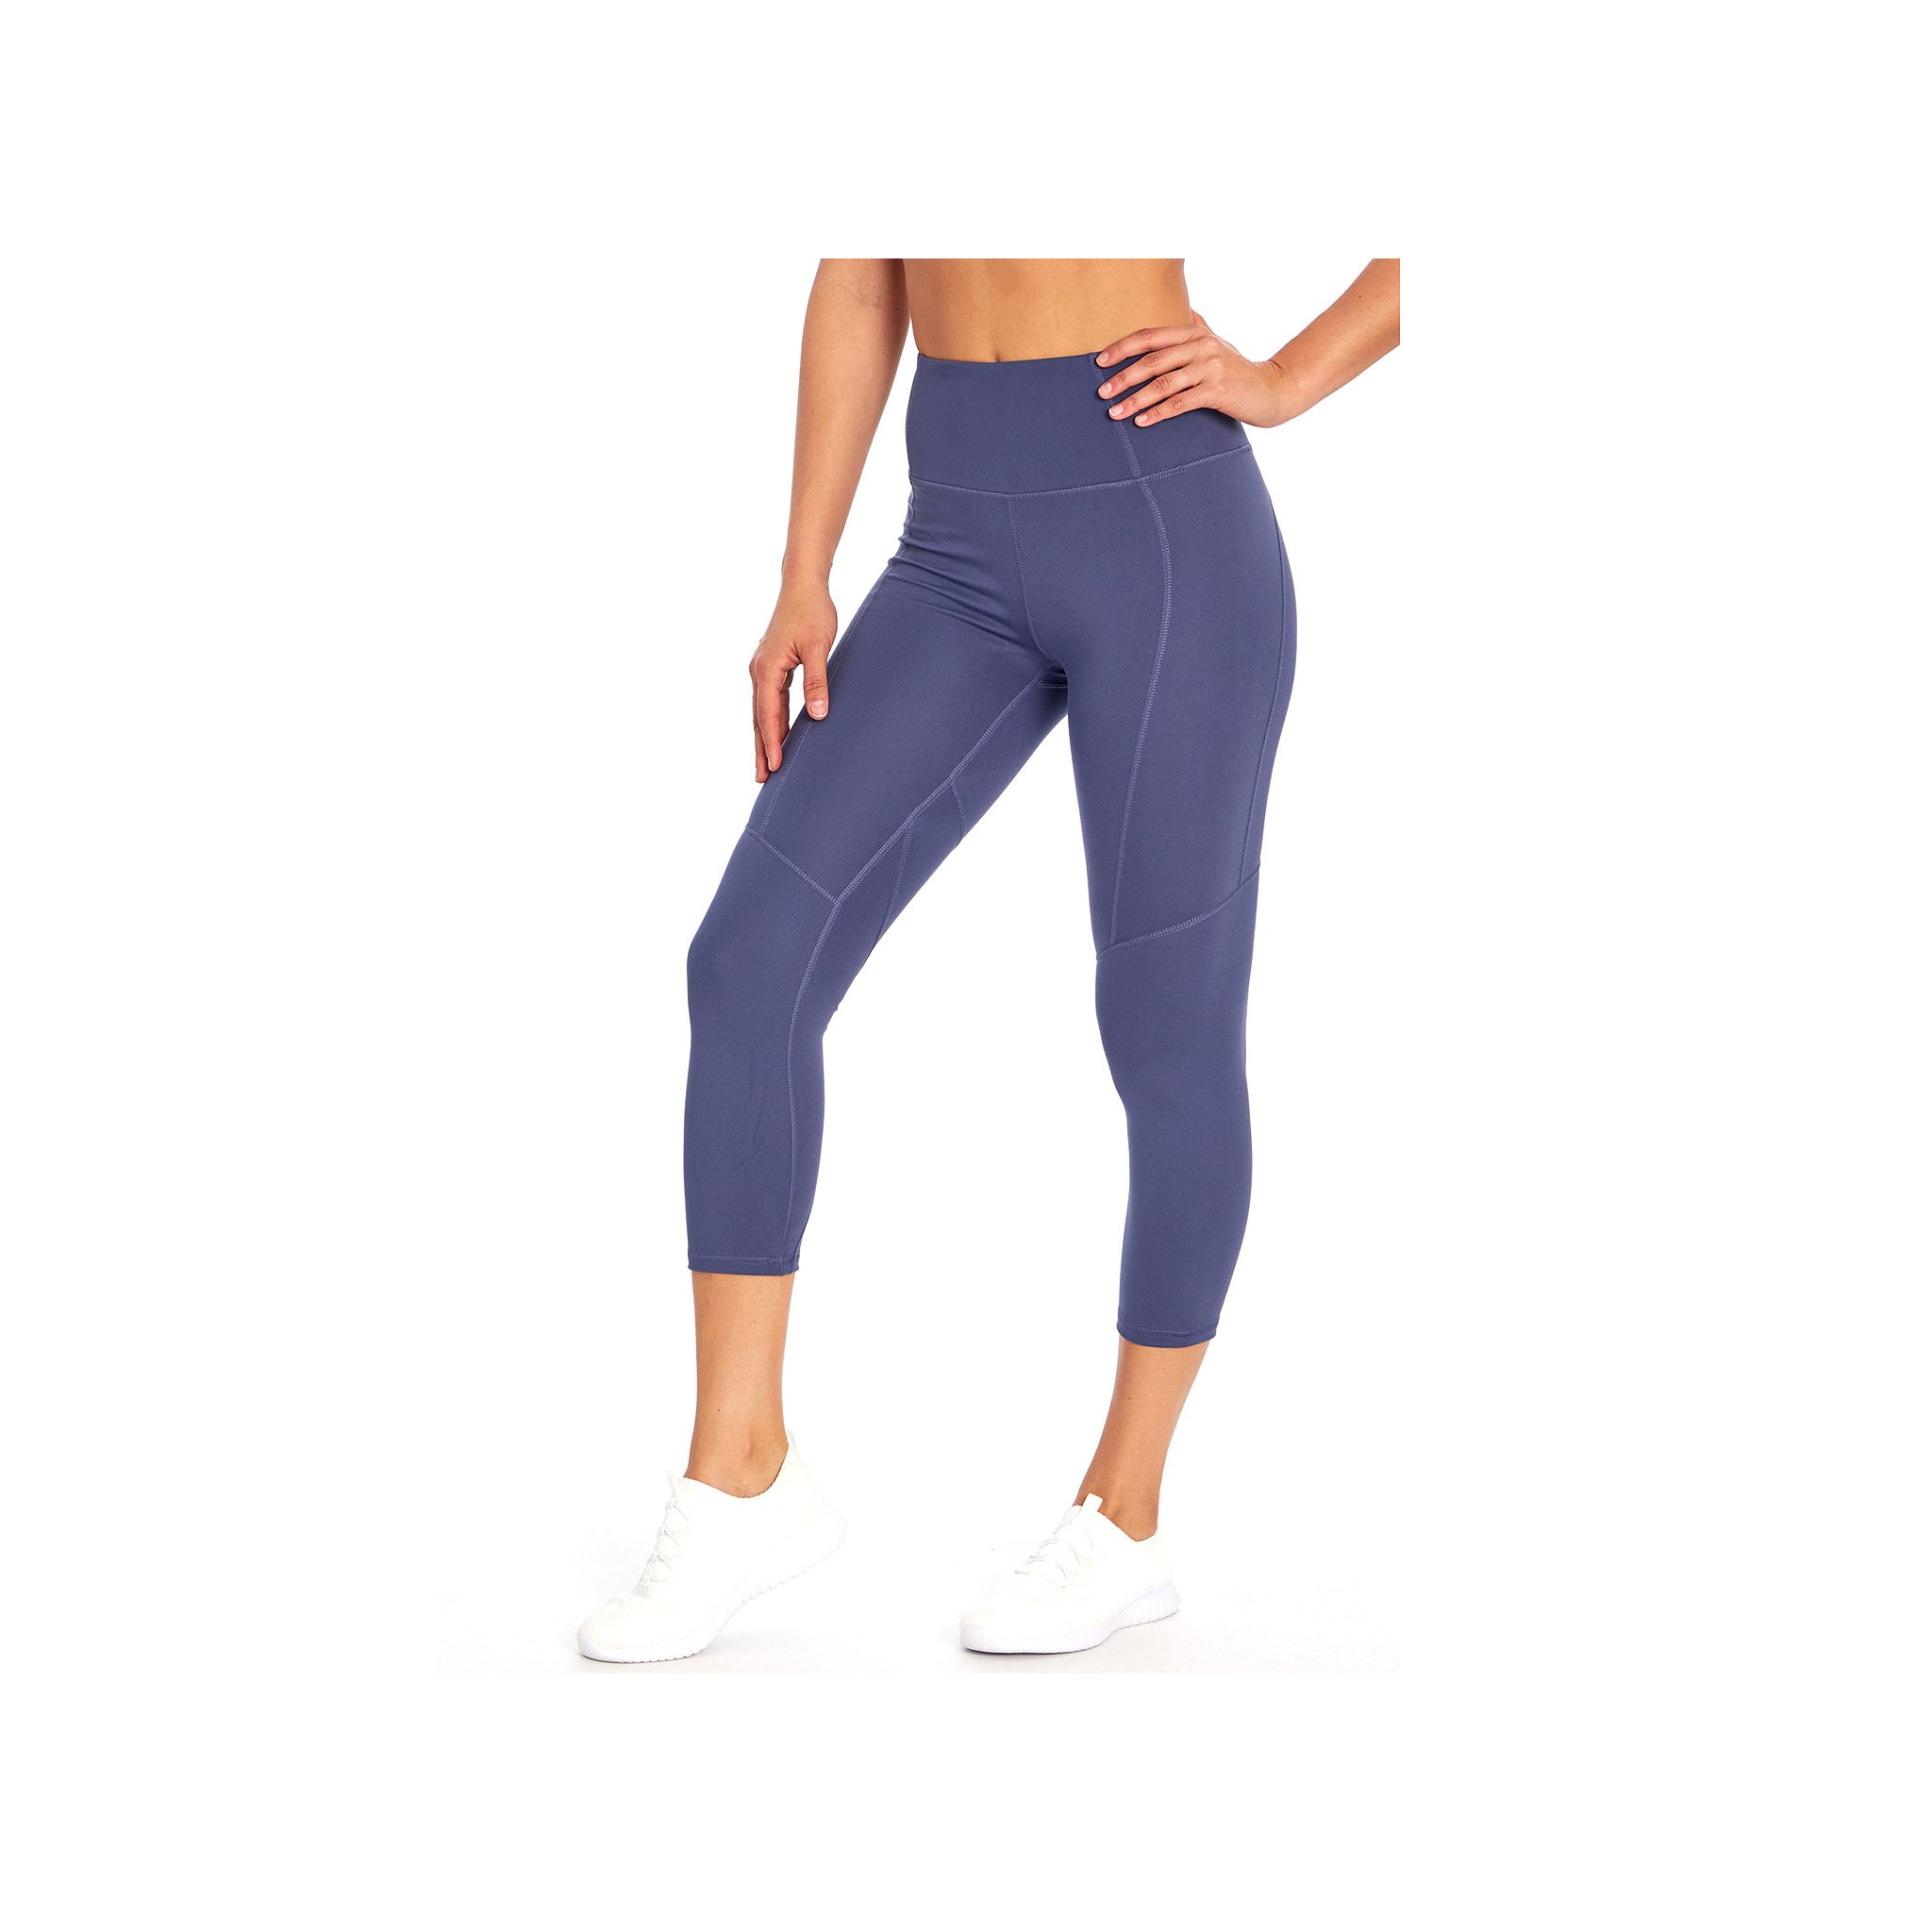 XL Marika Yoga Pants Activewear Leggings, Women's Fashion, Bottoms